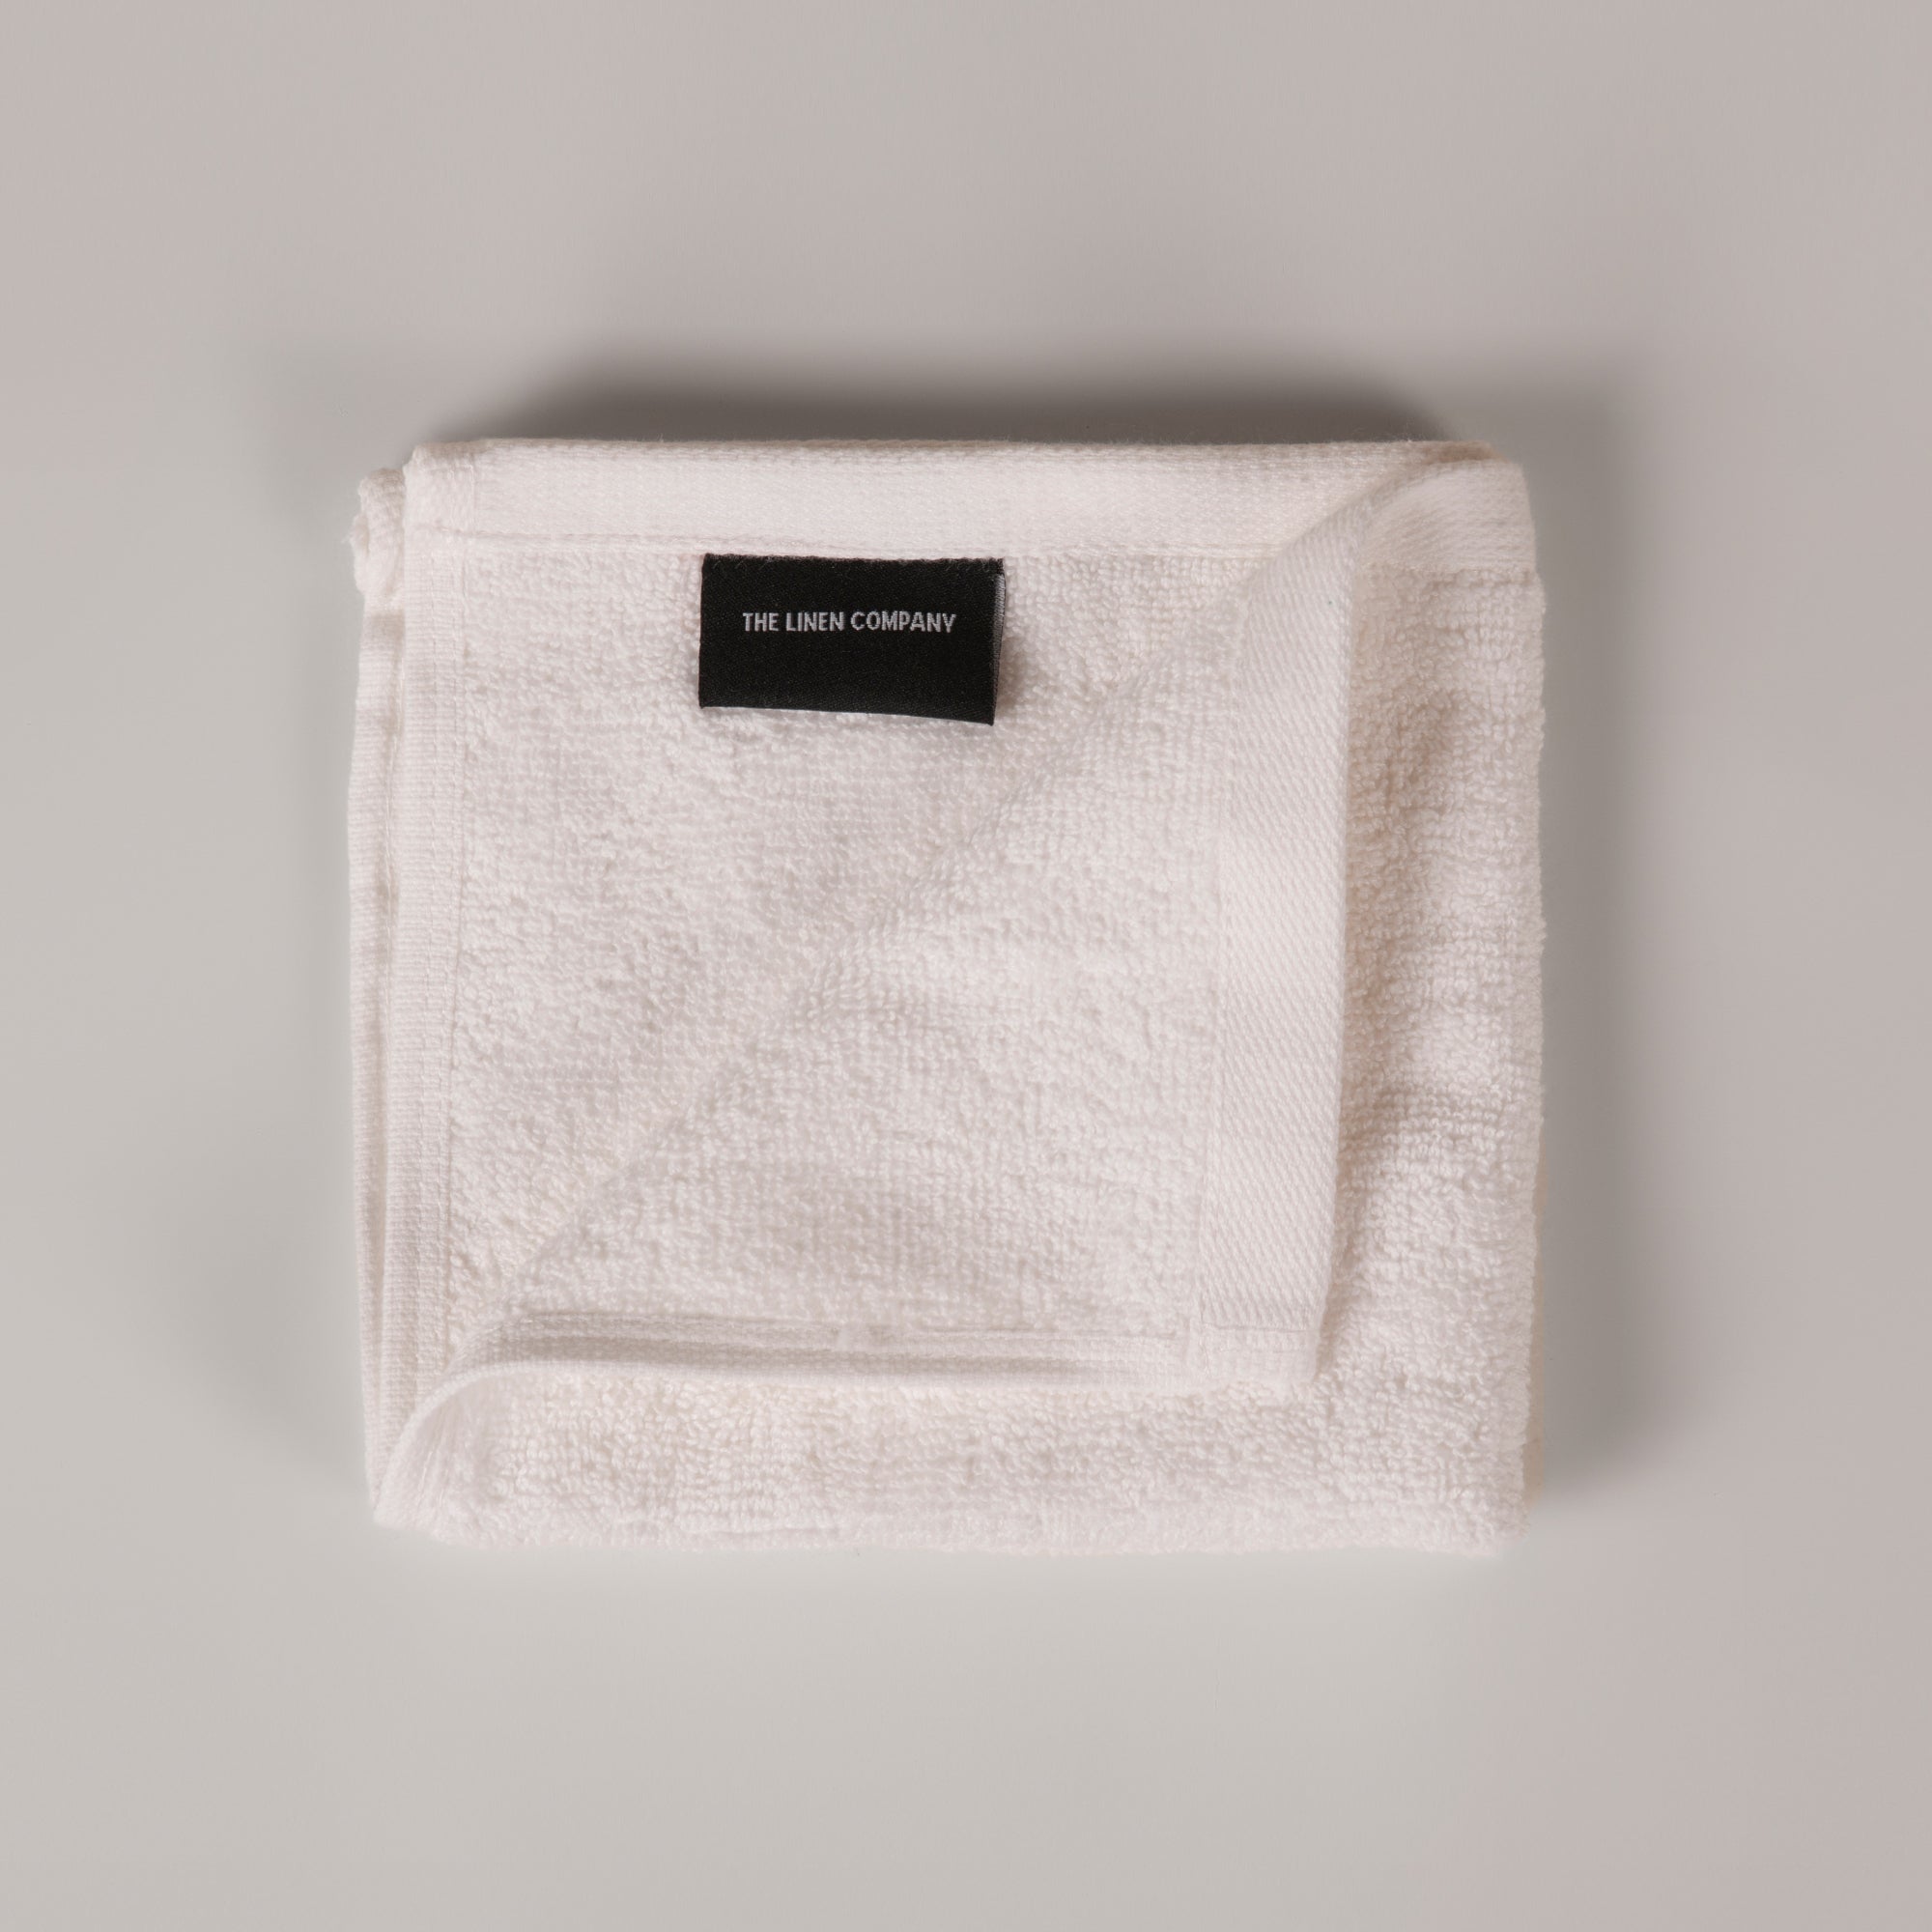 The Linen Company Accessories Wash White Plain Face Towel - Set of 3